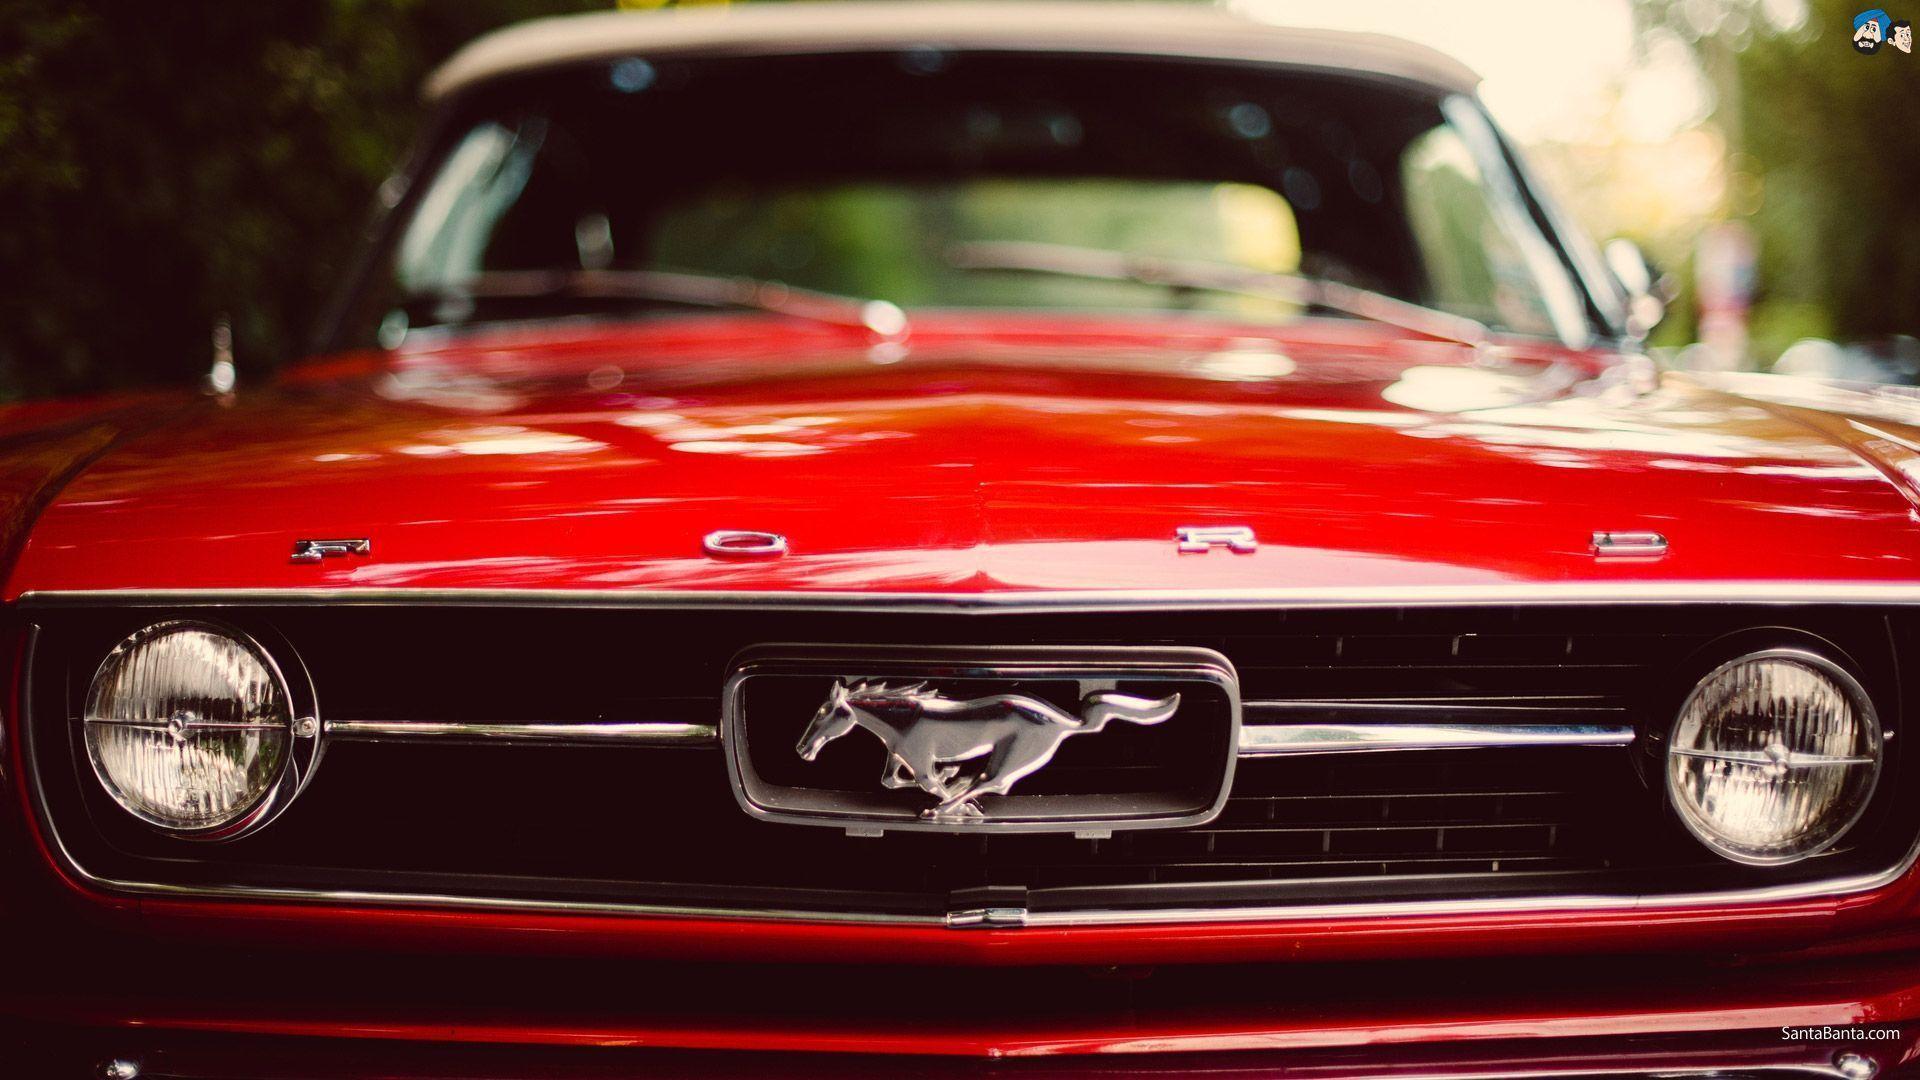 69 Ford Mustang Wallpapers On Wallpapersafari